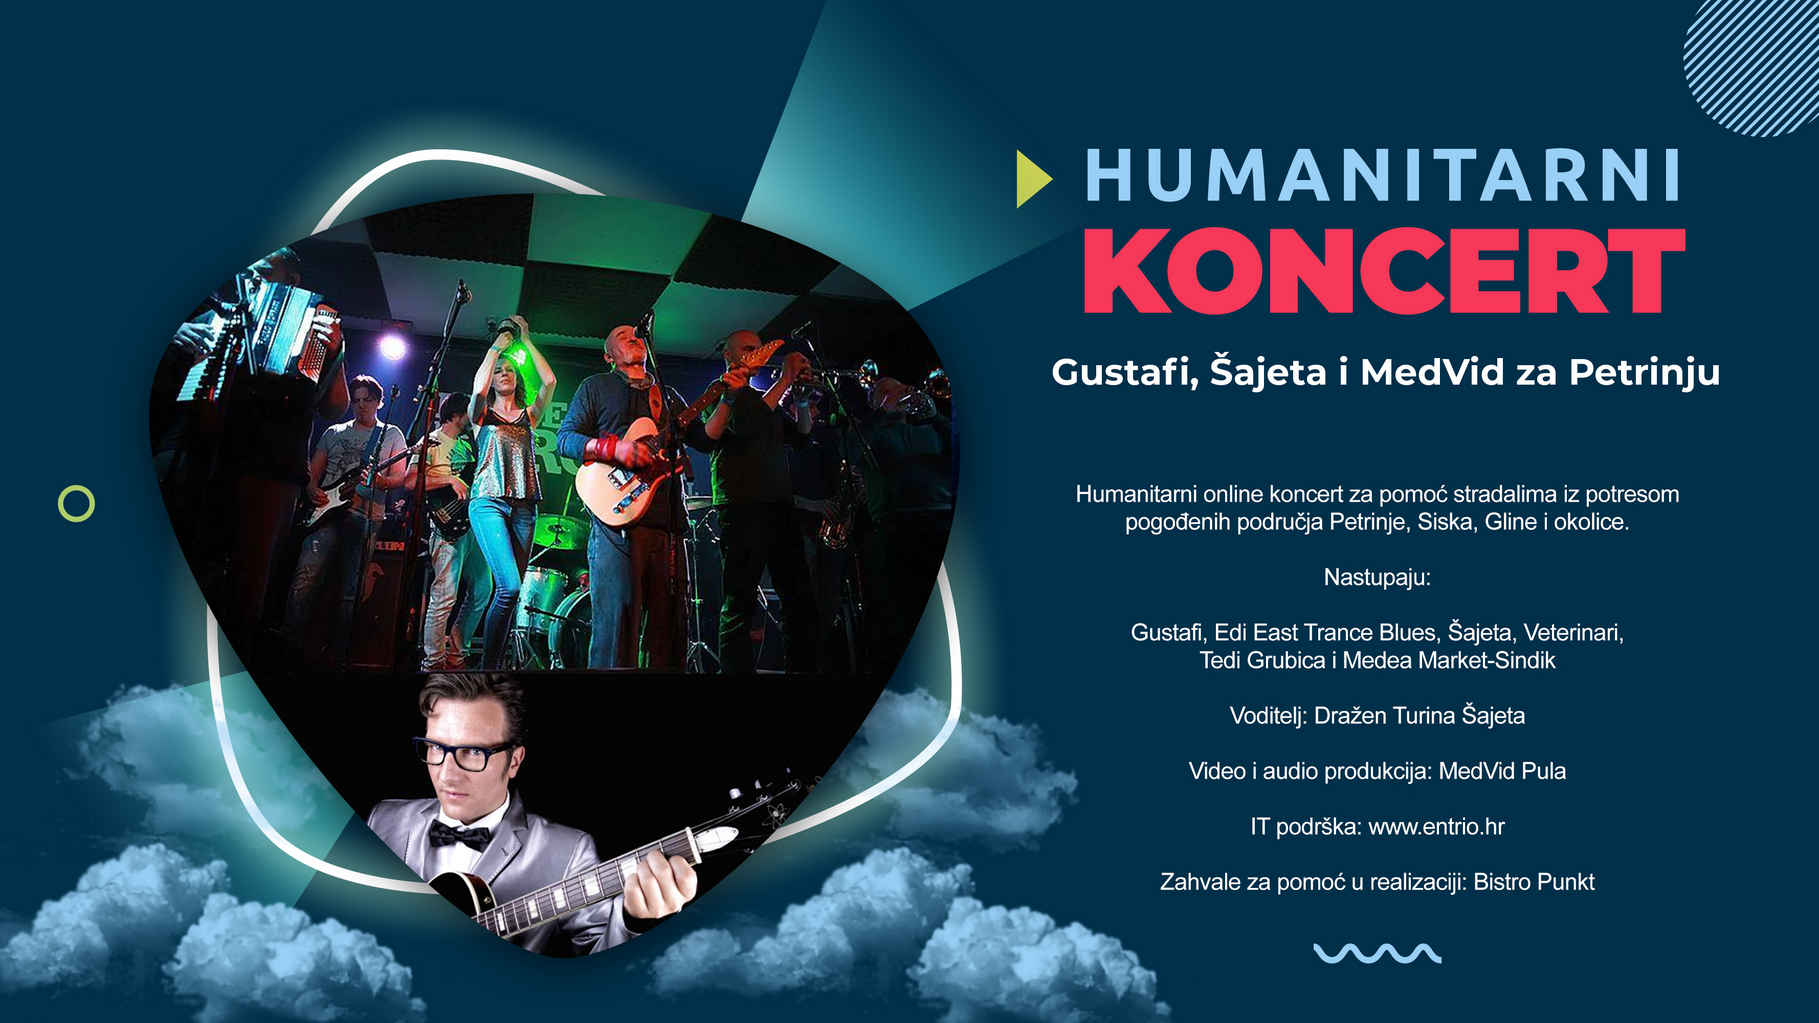 Humanitarni koncert Gustafi, Šajeta i MedVid za Petrinju